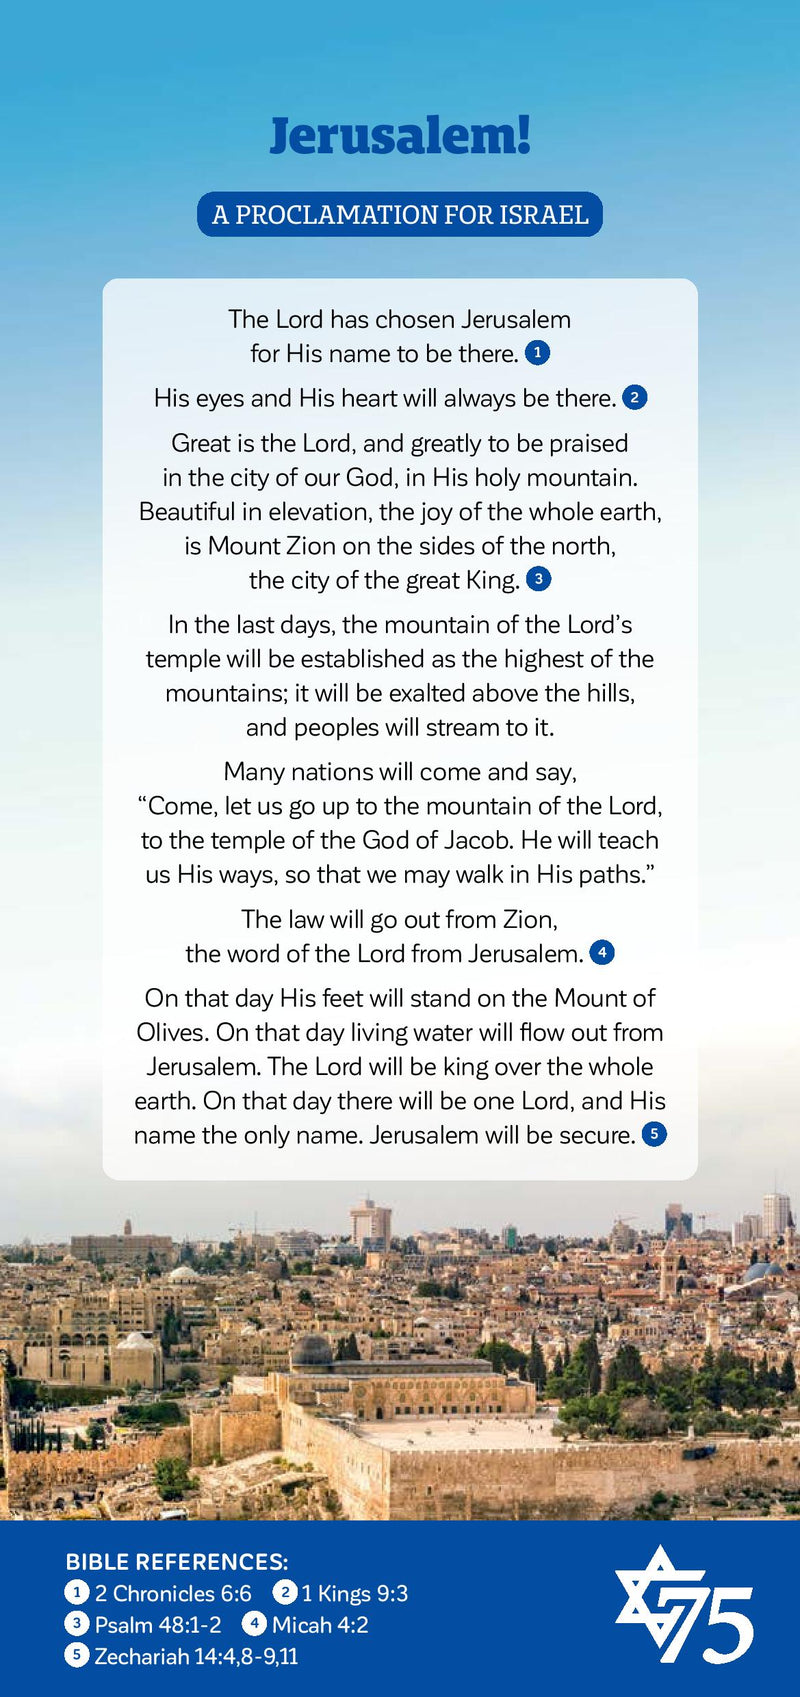 Jerusalem! – A Proclamation for Israel